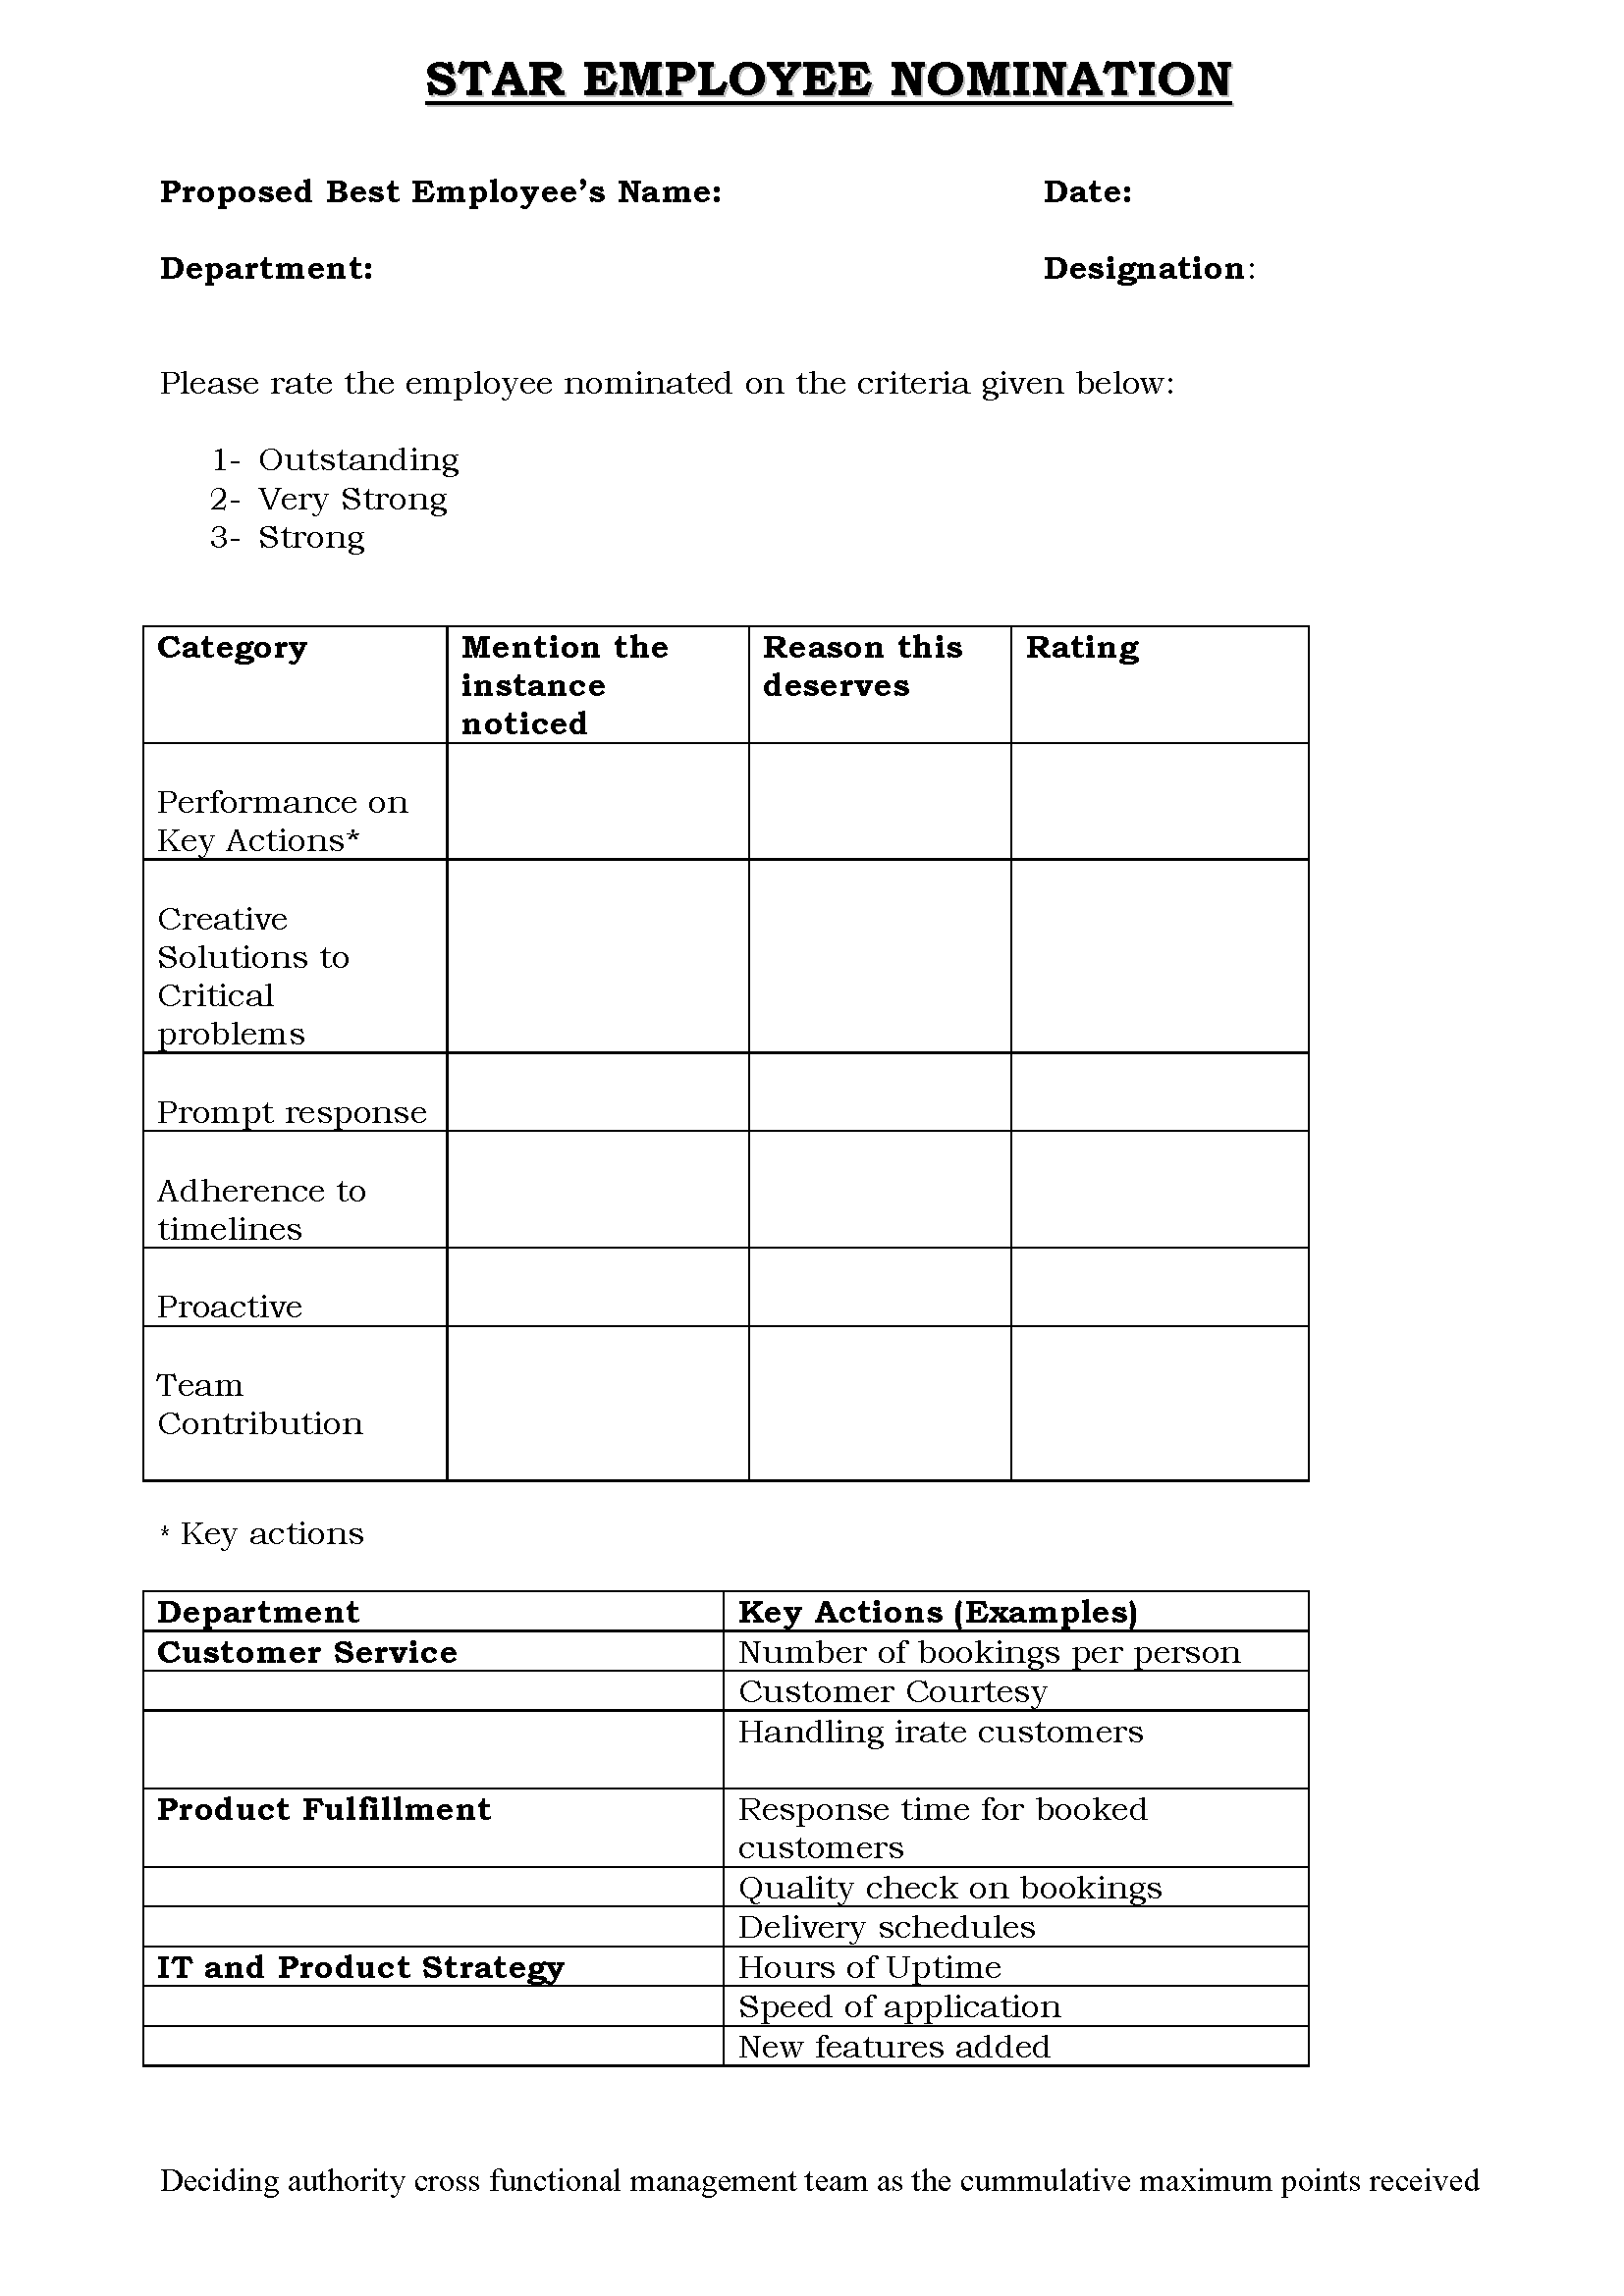 02 - Star Employee Nomination Form